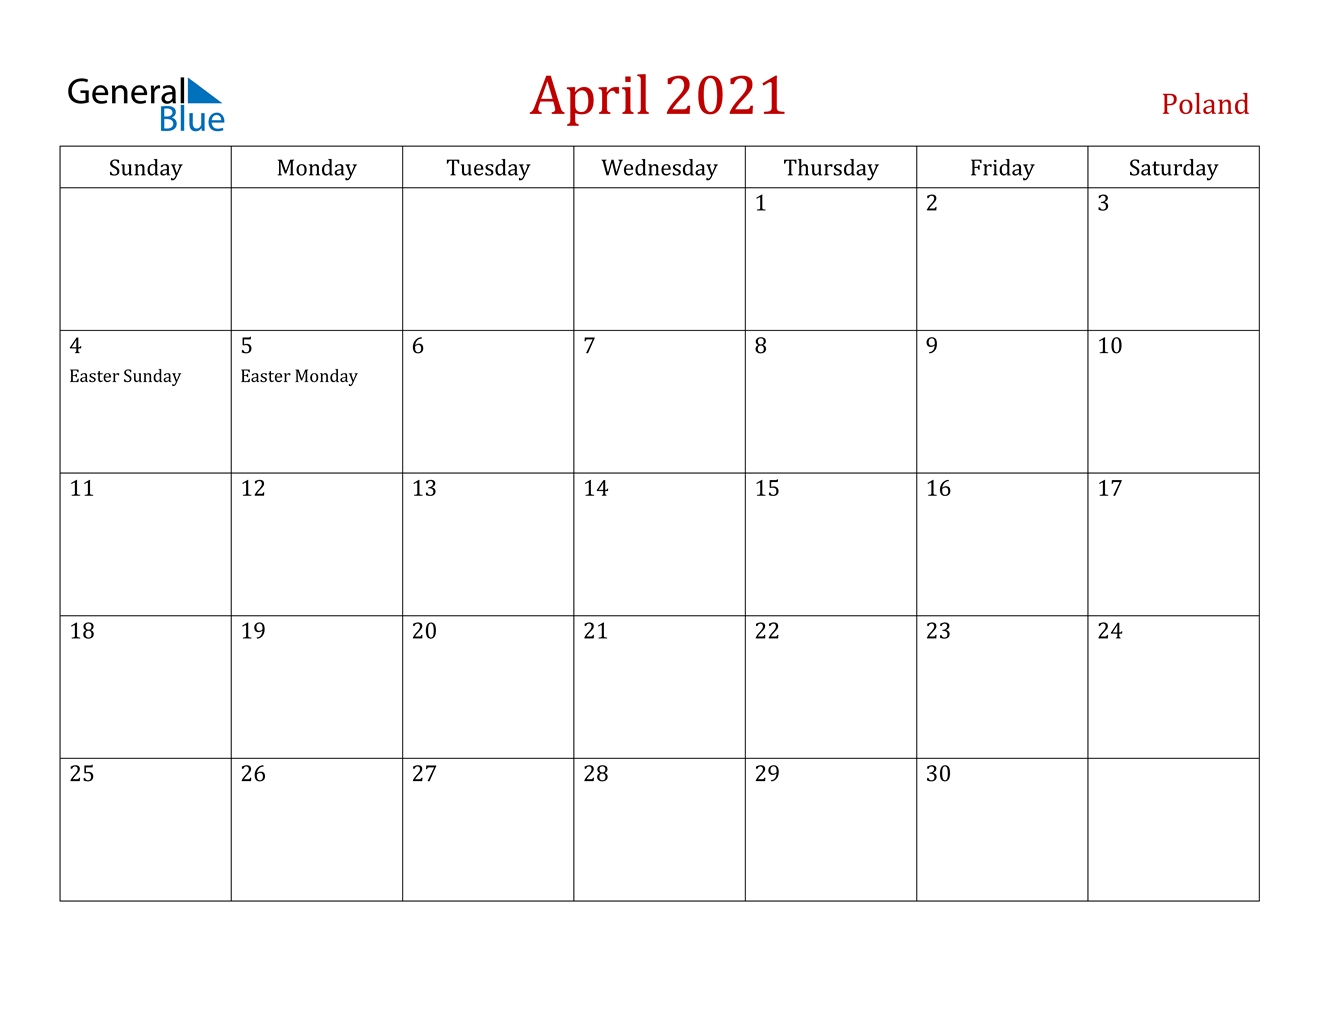 April 2021 Calendar - Poland